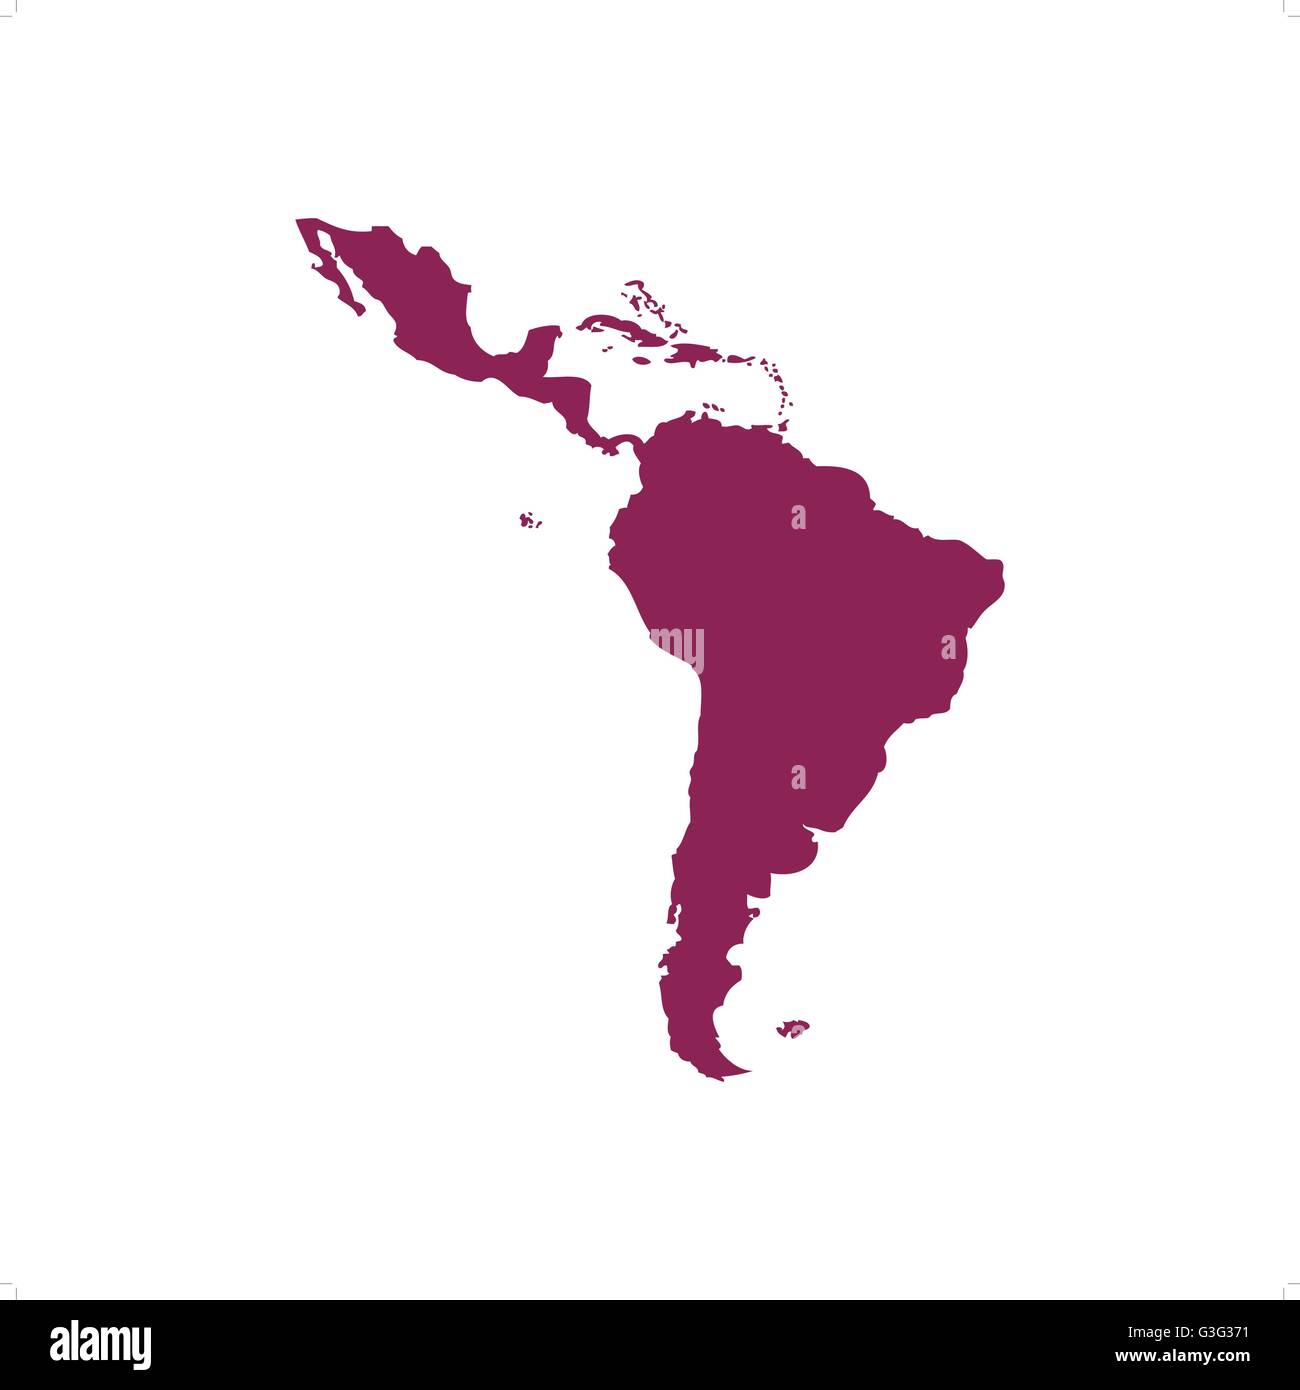 Латинская Америка силуэт